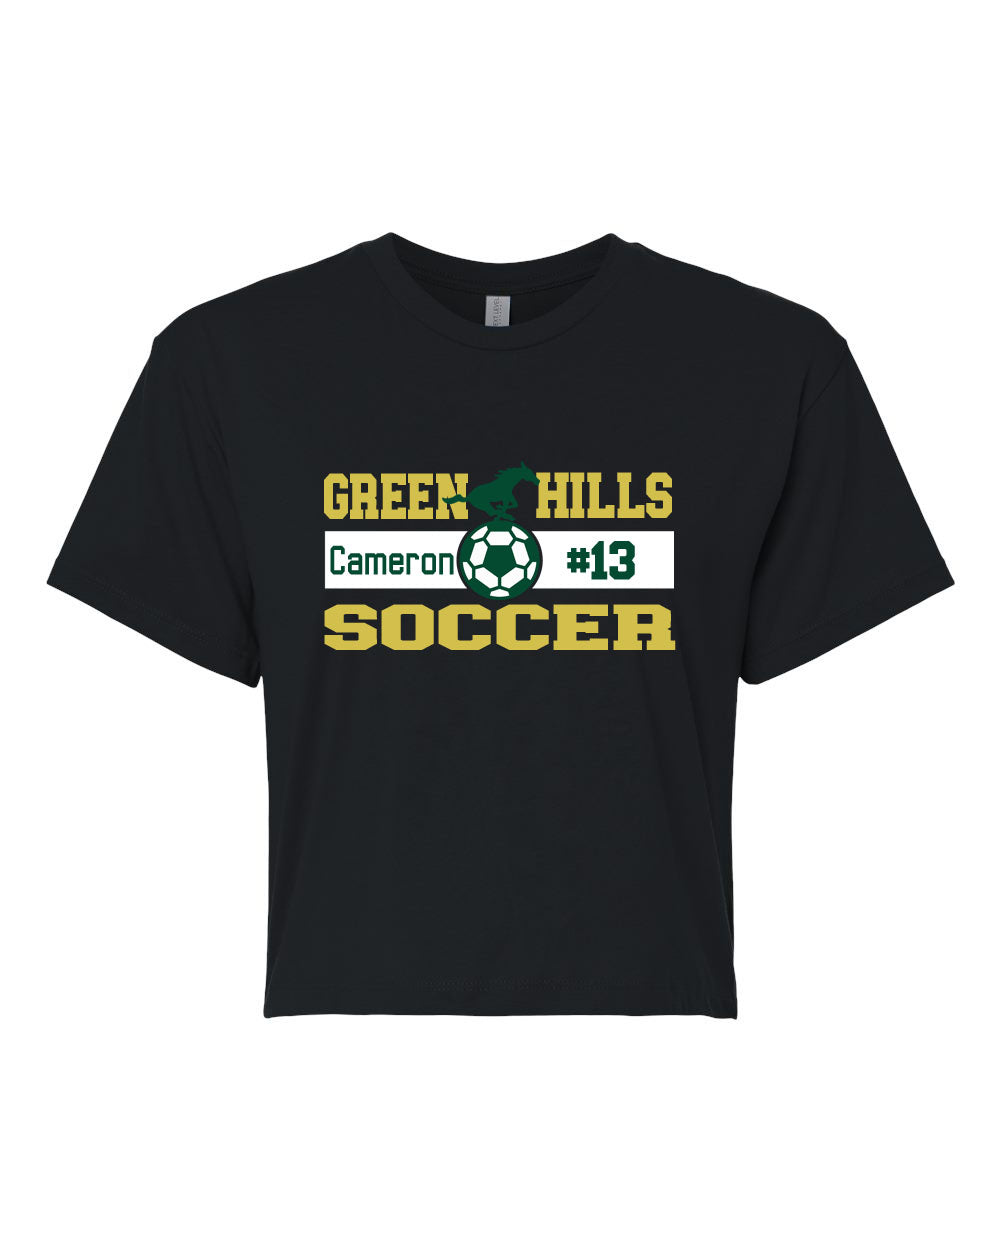 Green Hills Soccer design 2 Crop Top